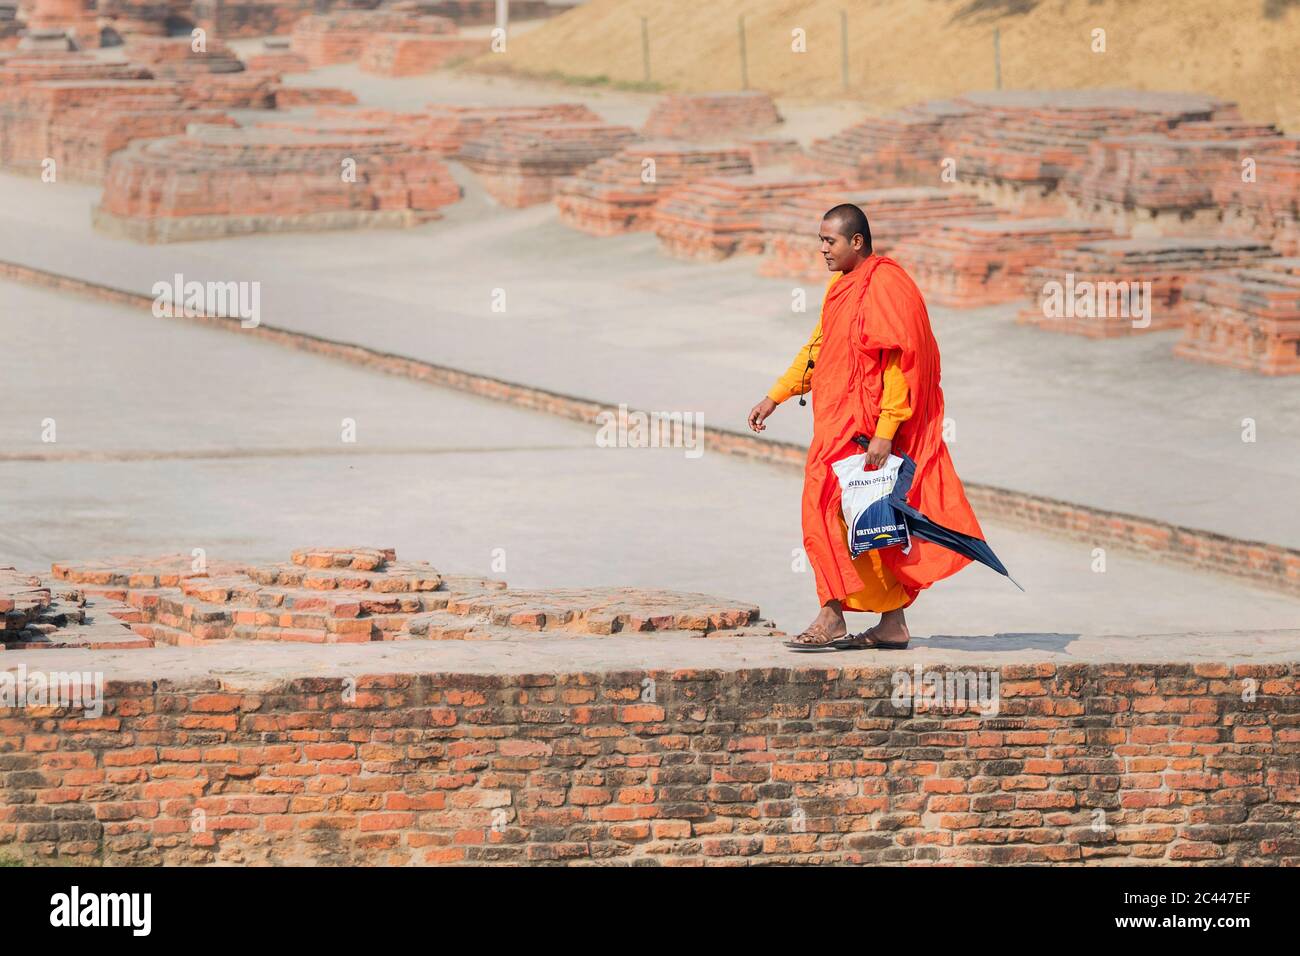 The image of Budhist monks at Sarnath Stupa, Varanasi,  Uttar Pradesh, India, Asia Stock Photo